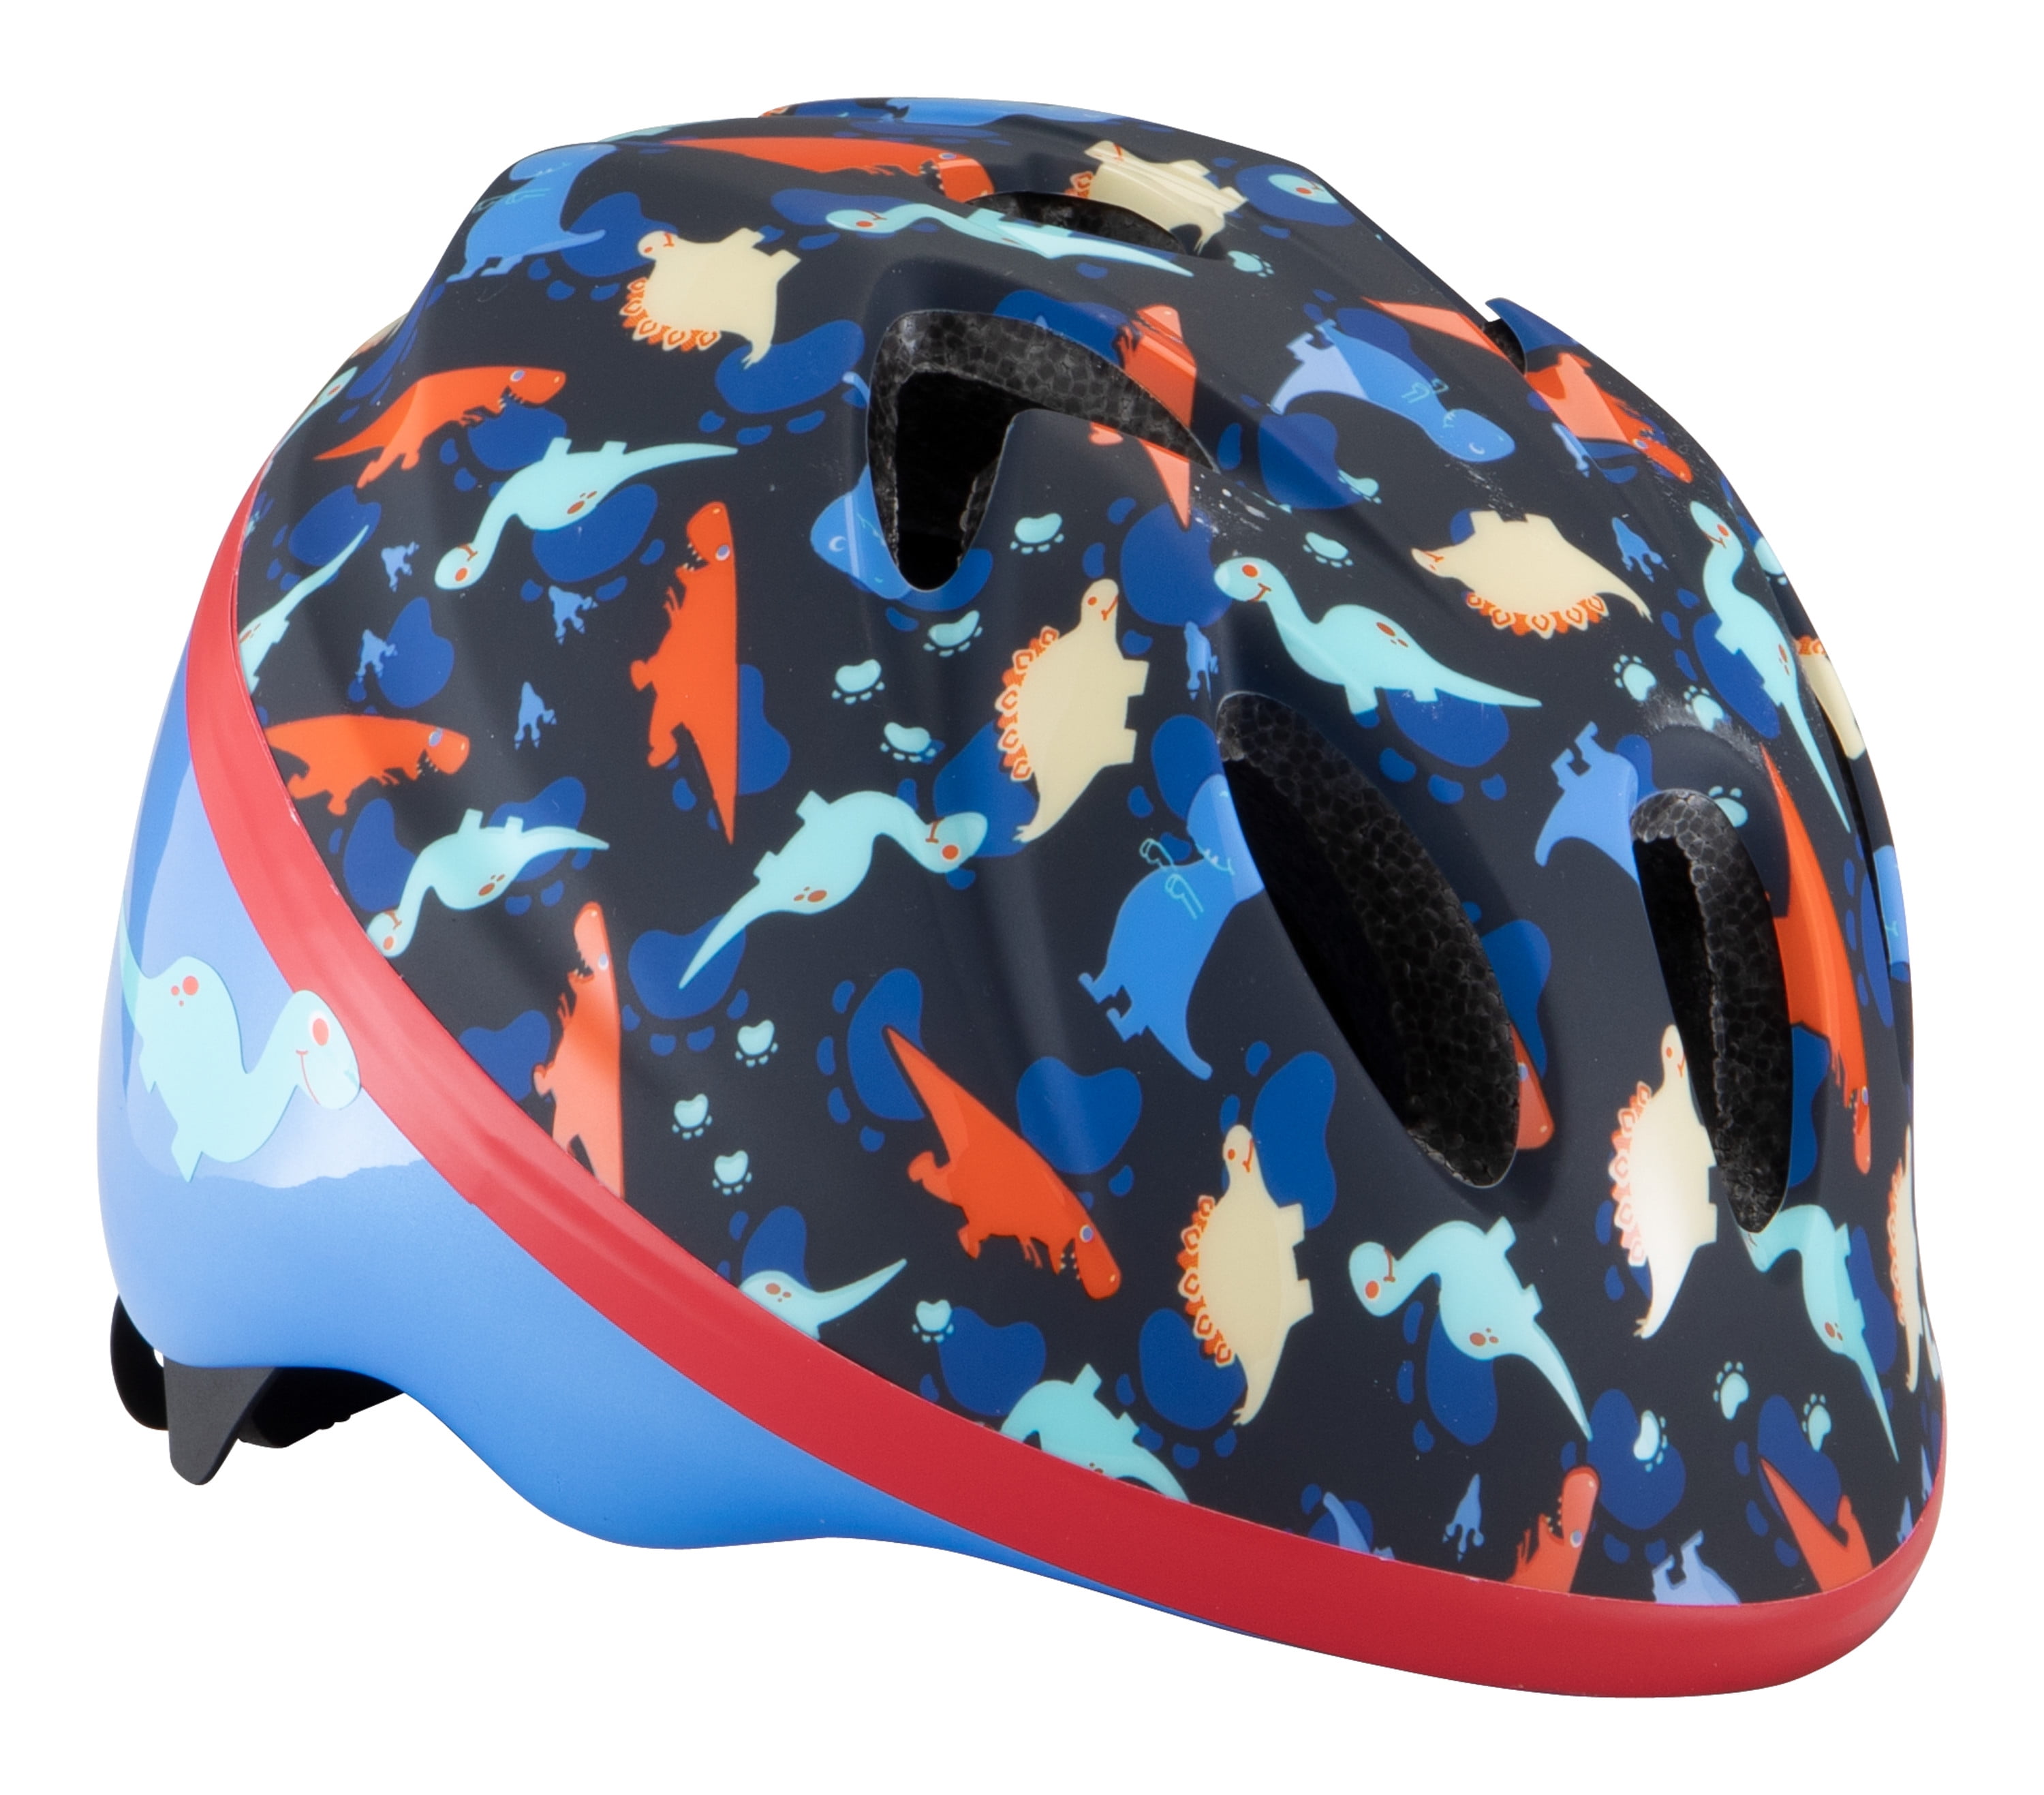 Dinosaur Kids' Helmet Toddler Youth Child Bike Bicycle Cycling Skateboard Helmet 